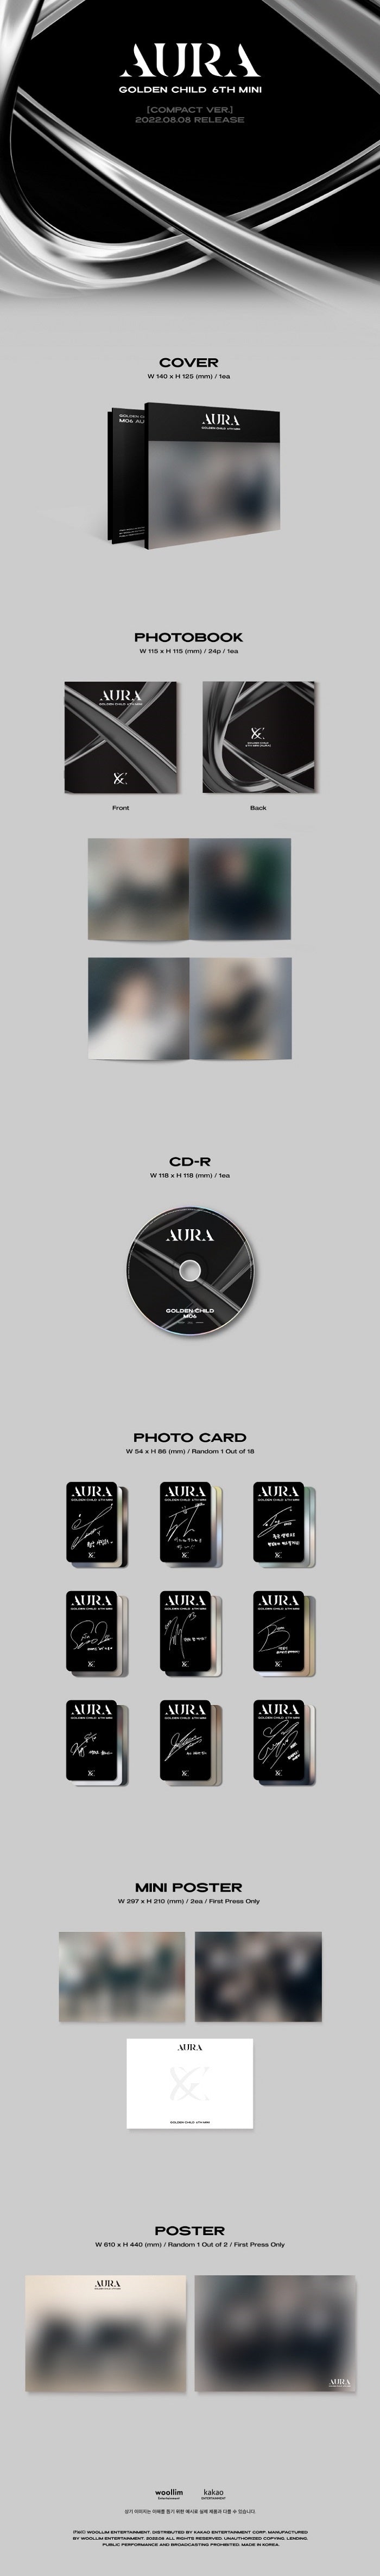 Golden Child - AURA (الألبوم السادس الصغير) Compact Ver.